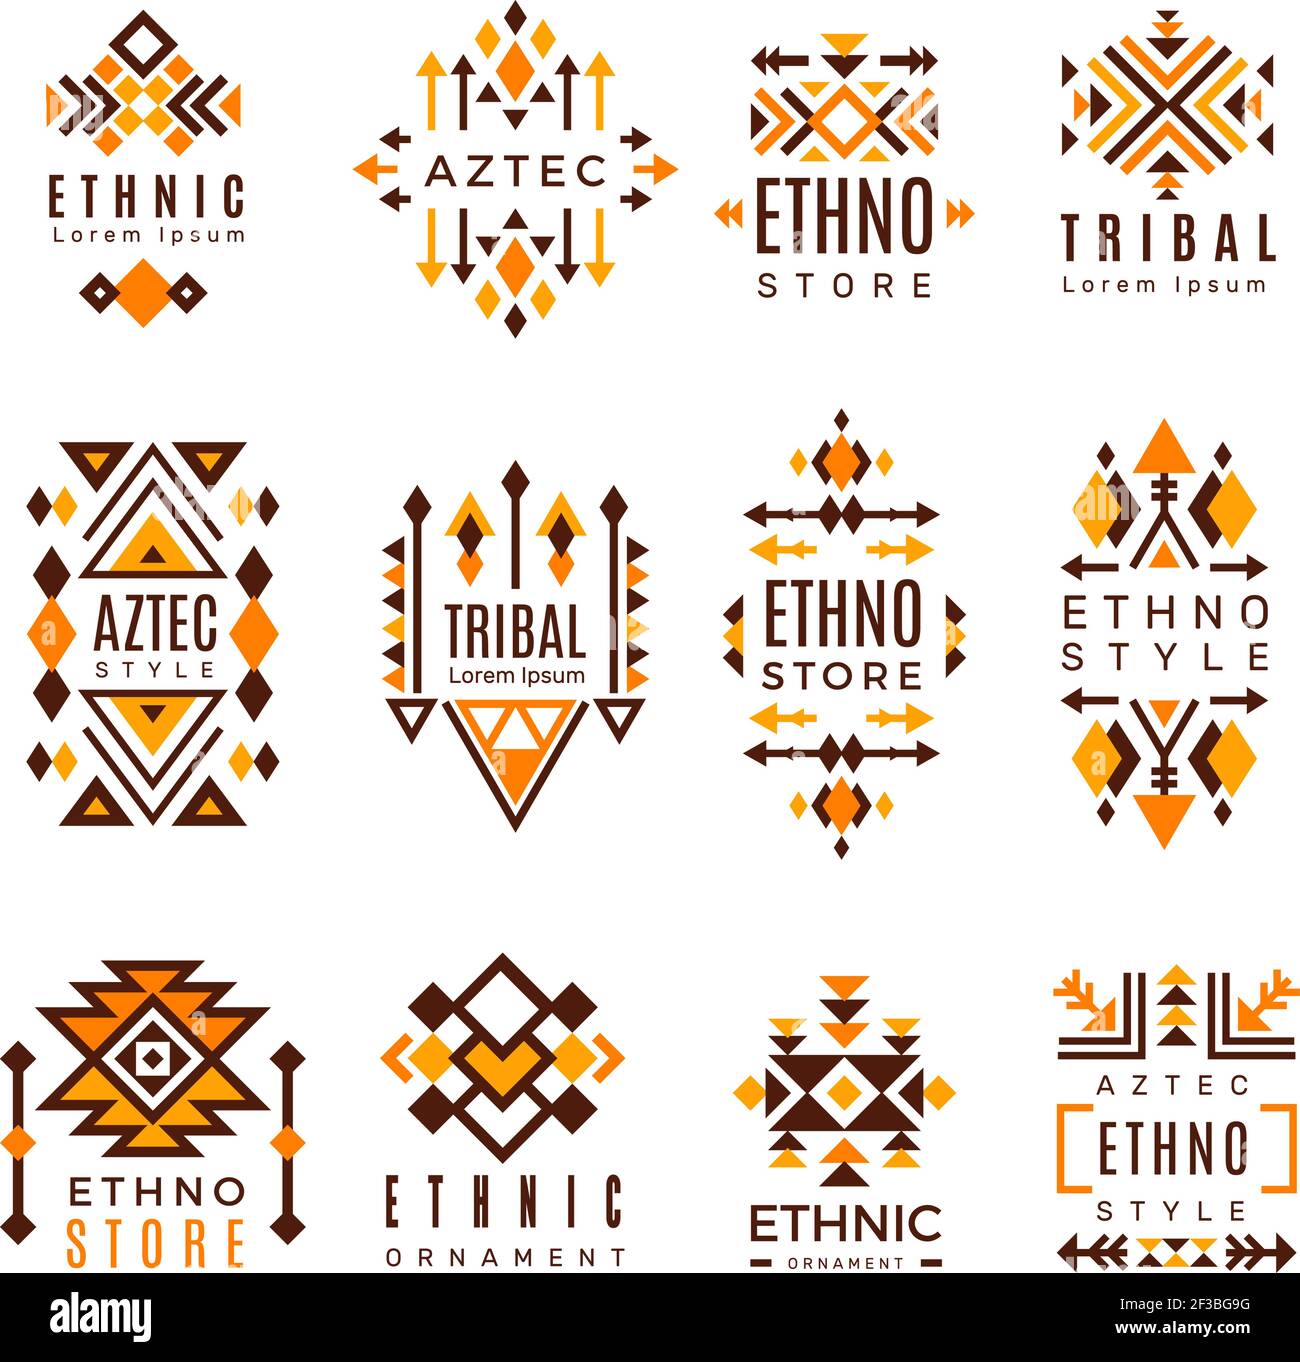 Ethnic logo. Trendy tribal symbols geometric shapes indian decorative mexican vector elements Stock Vector